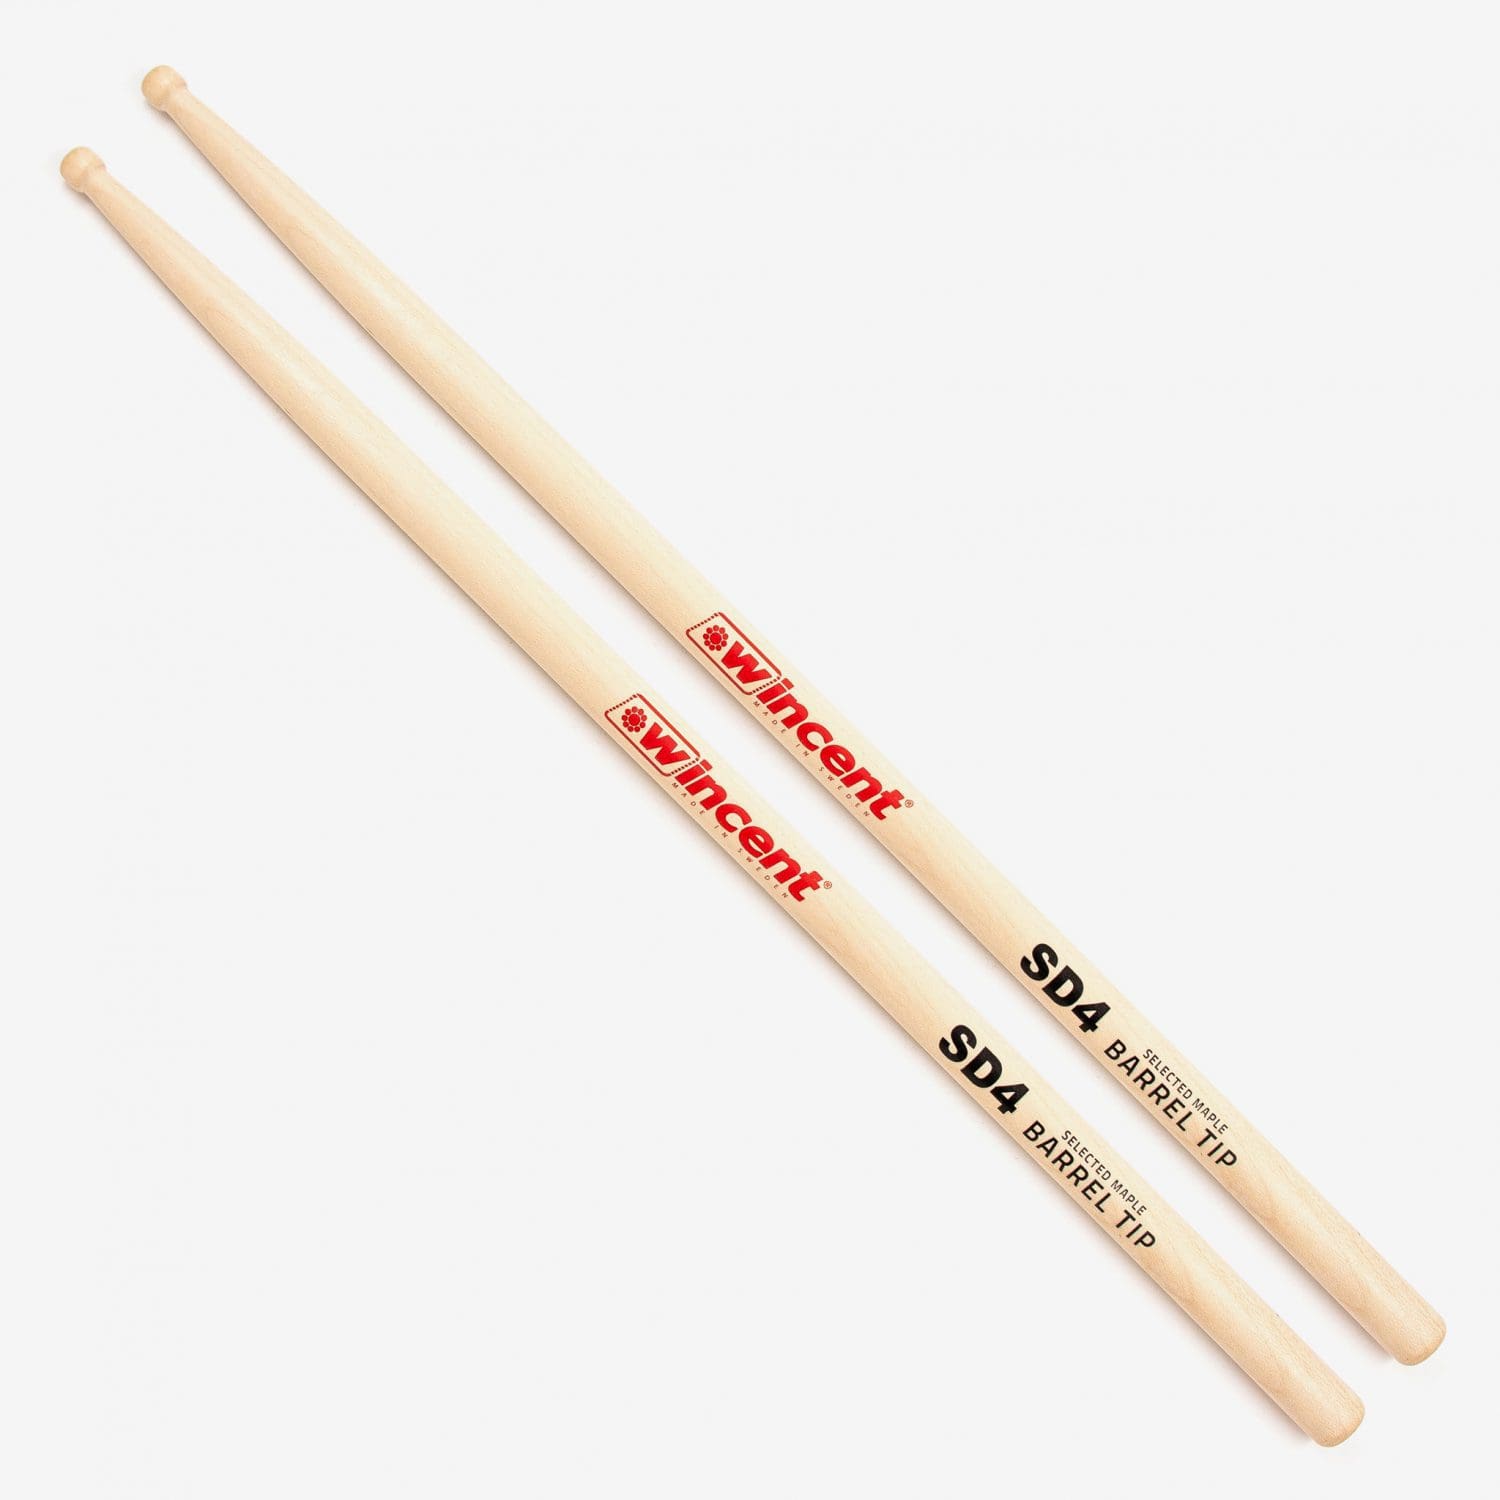 Maple Barrel Tip Snare Drum Sticks